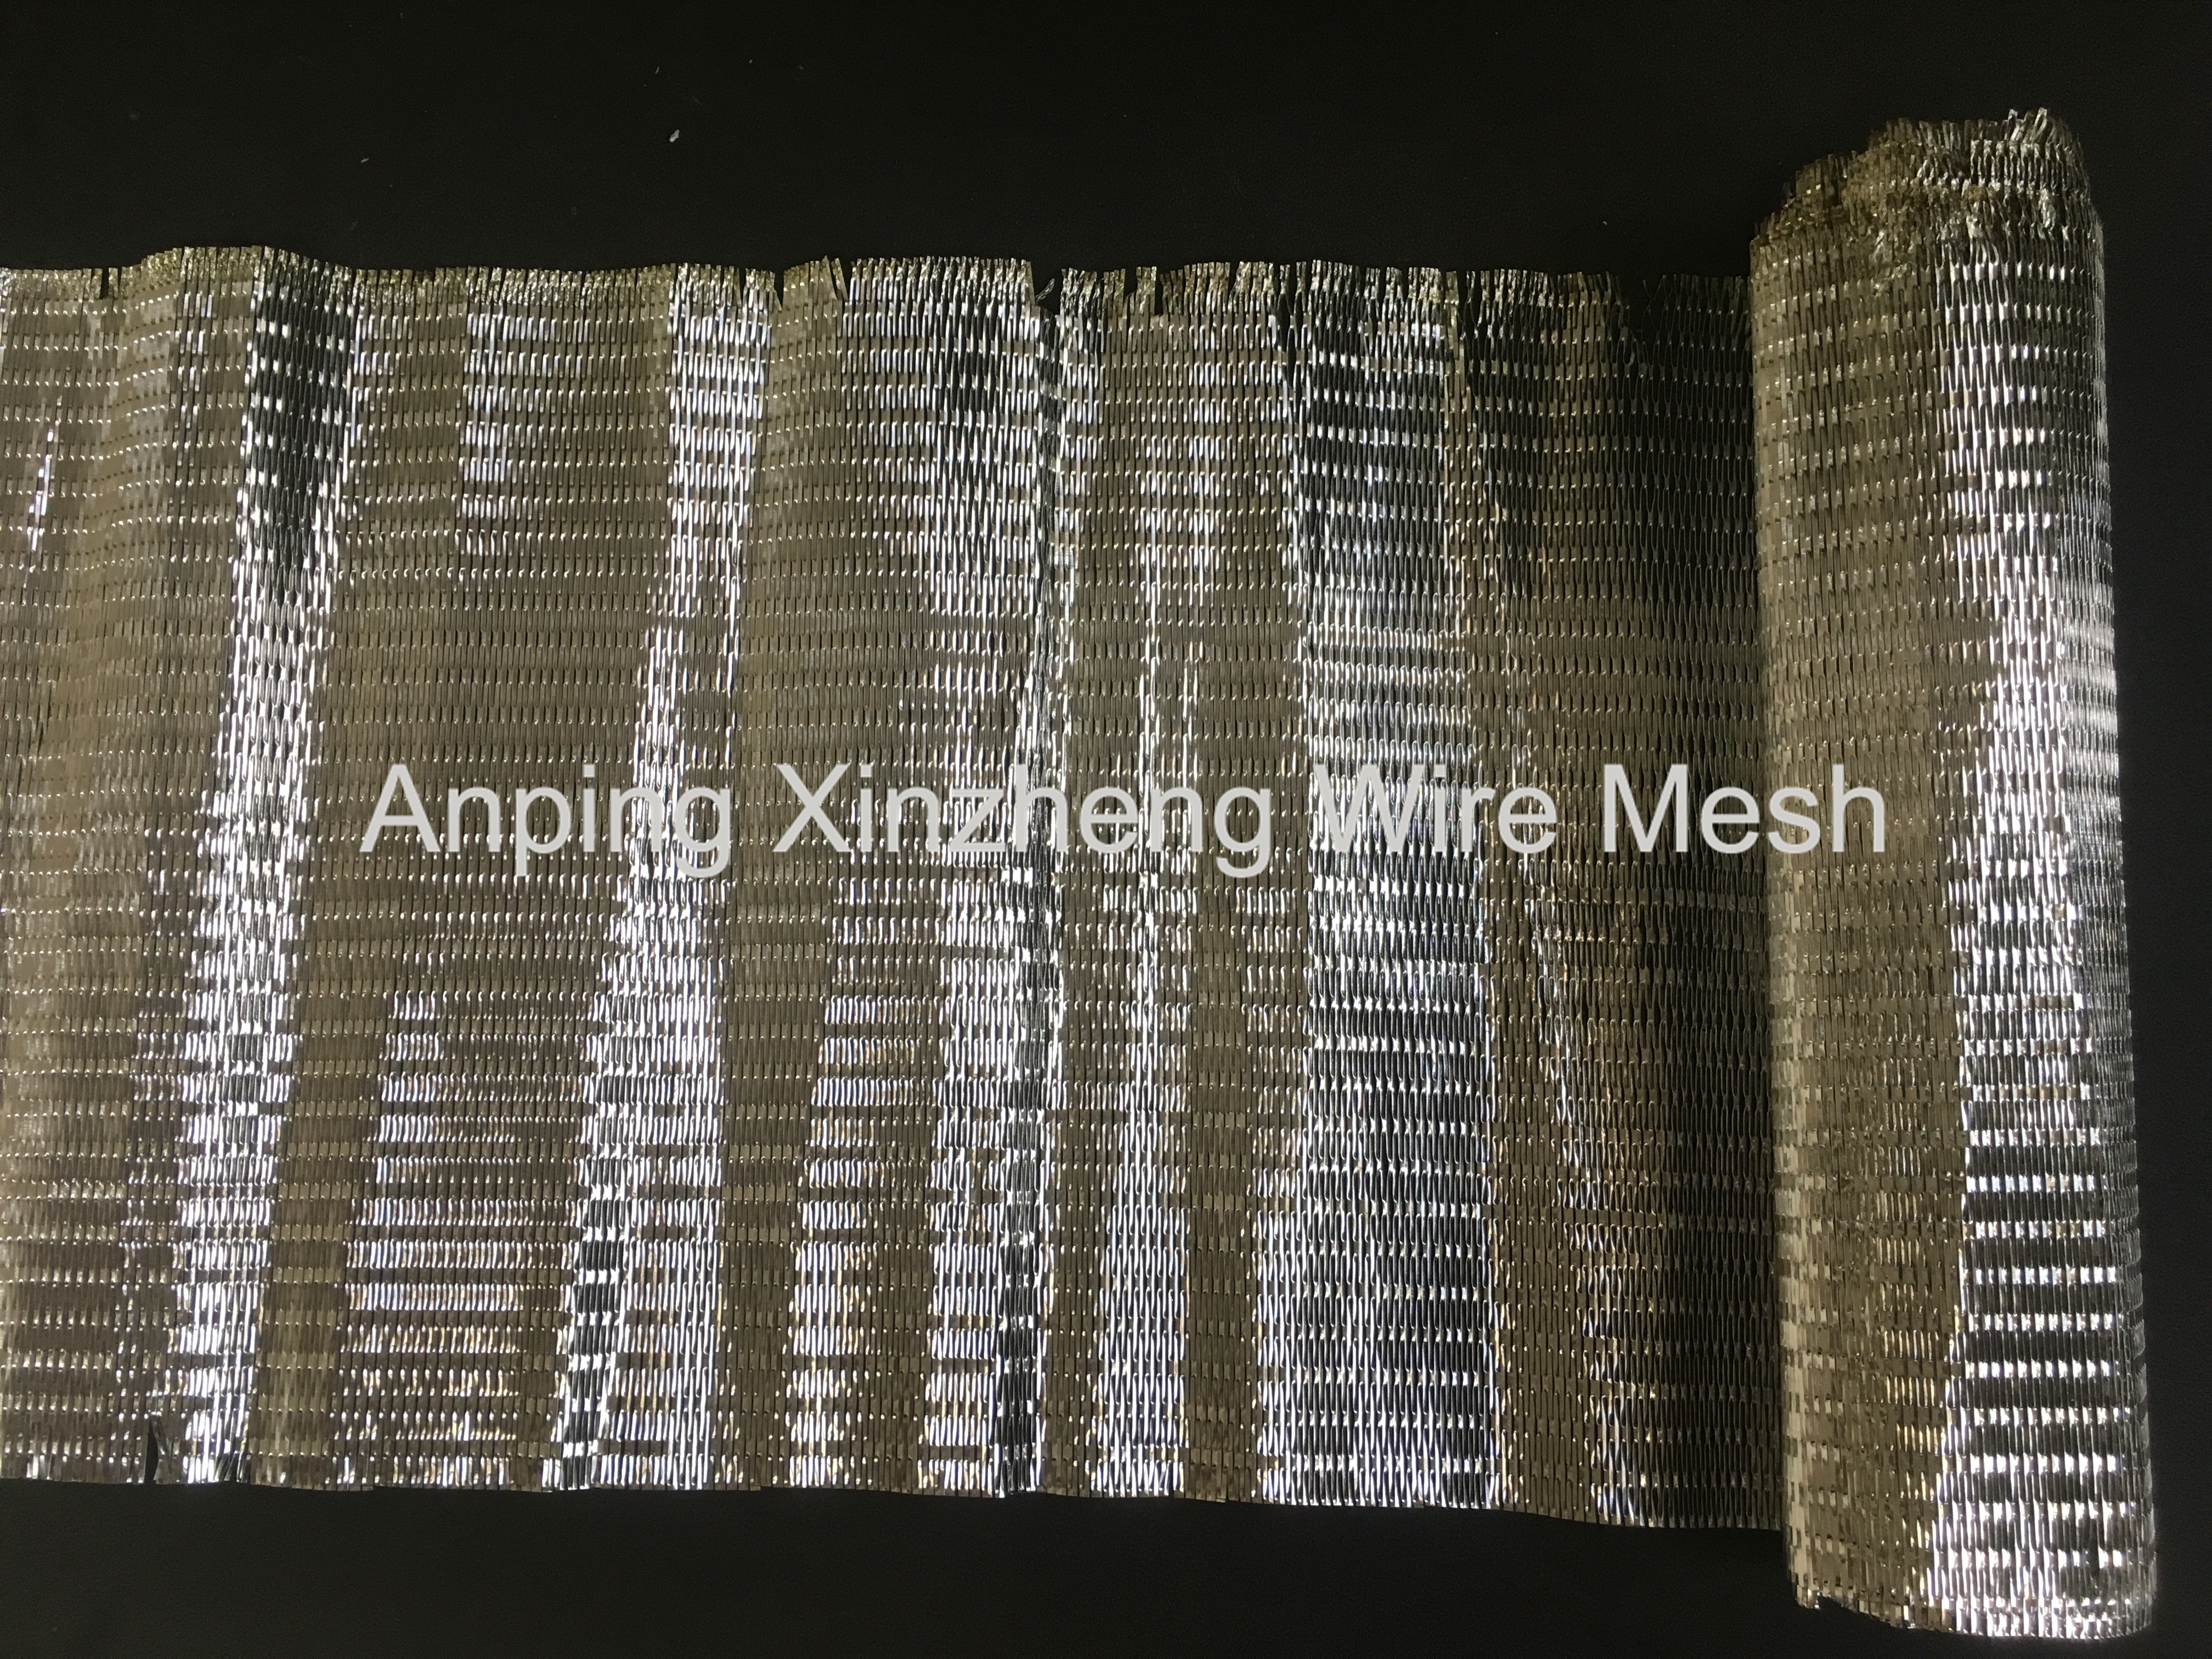 Aluminum Foil Mesh Filter